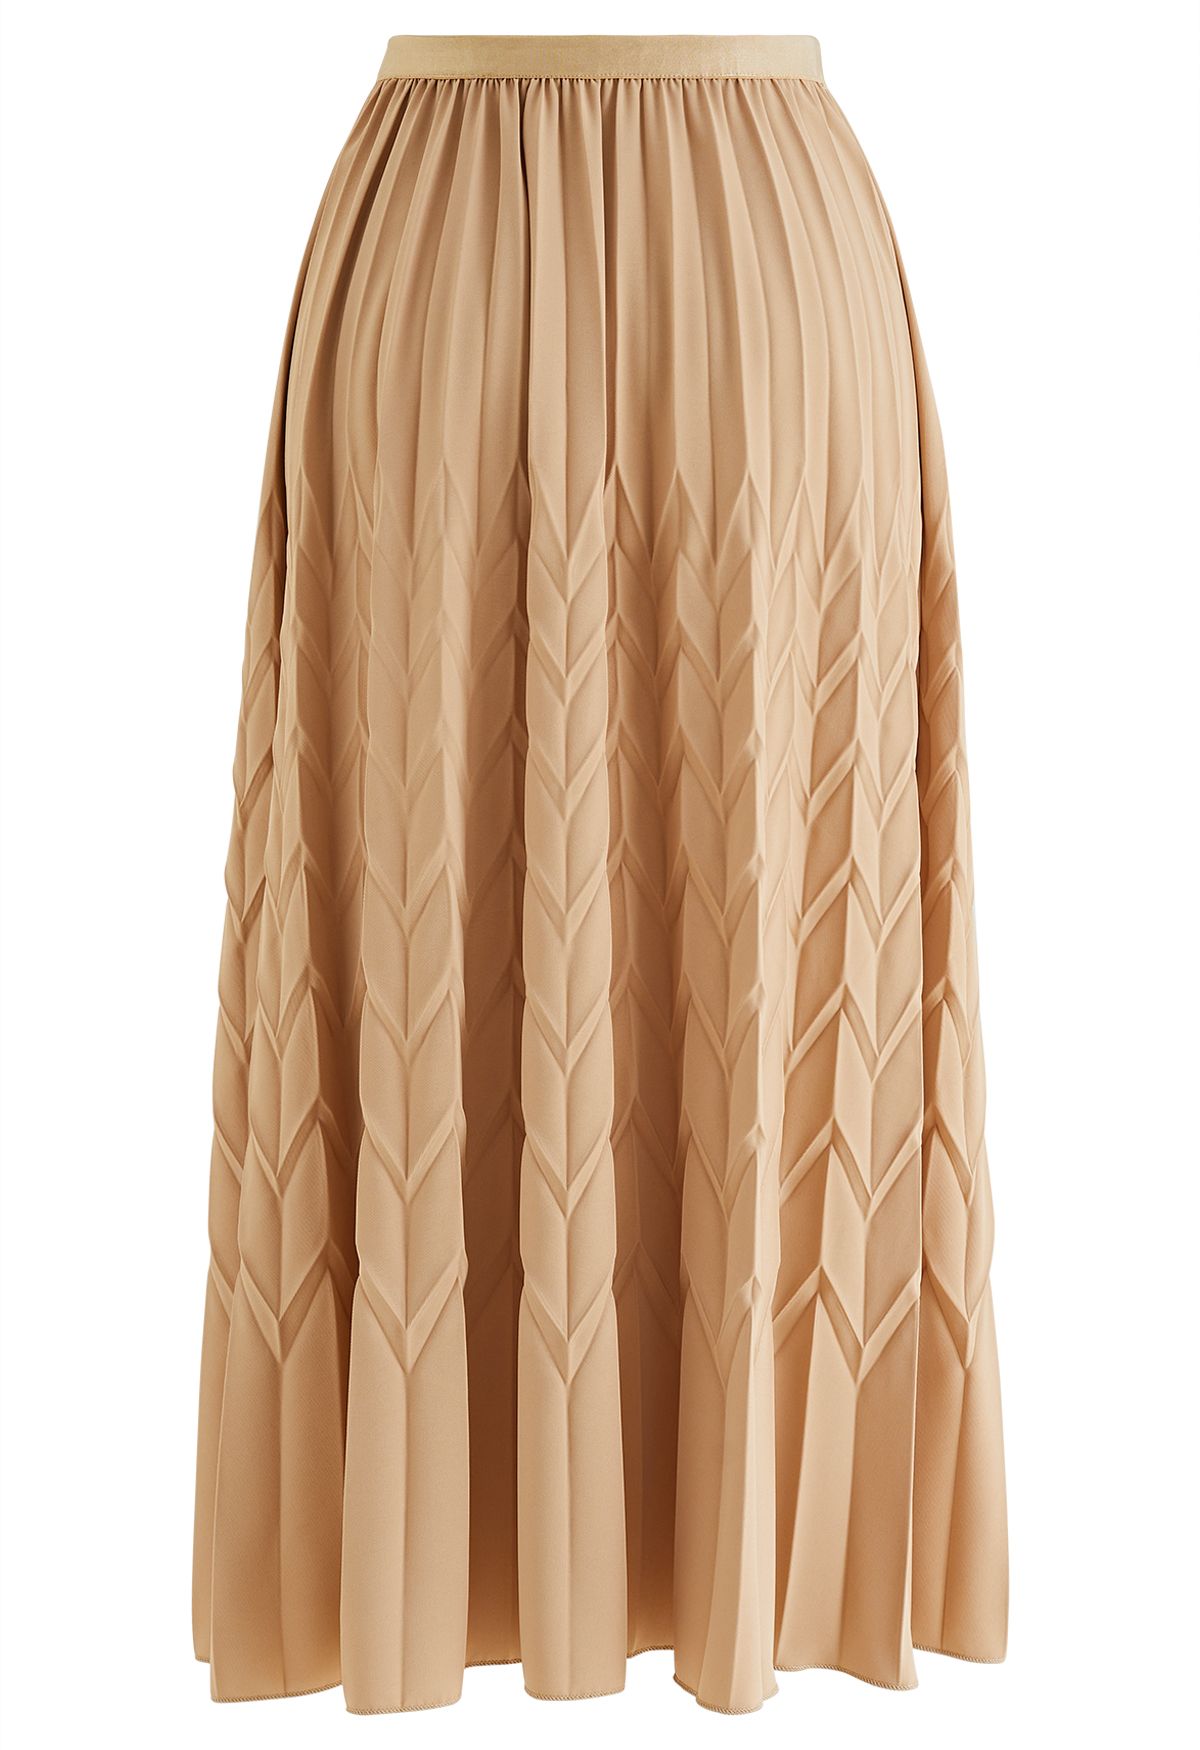 Zigzag Embossed Pleated Midi Skirt in Tan